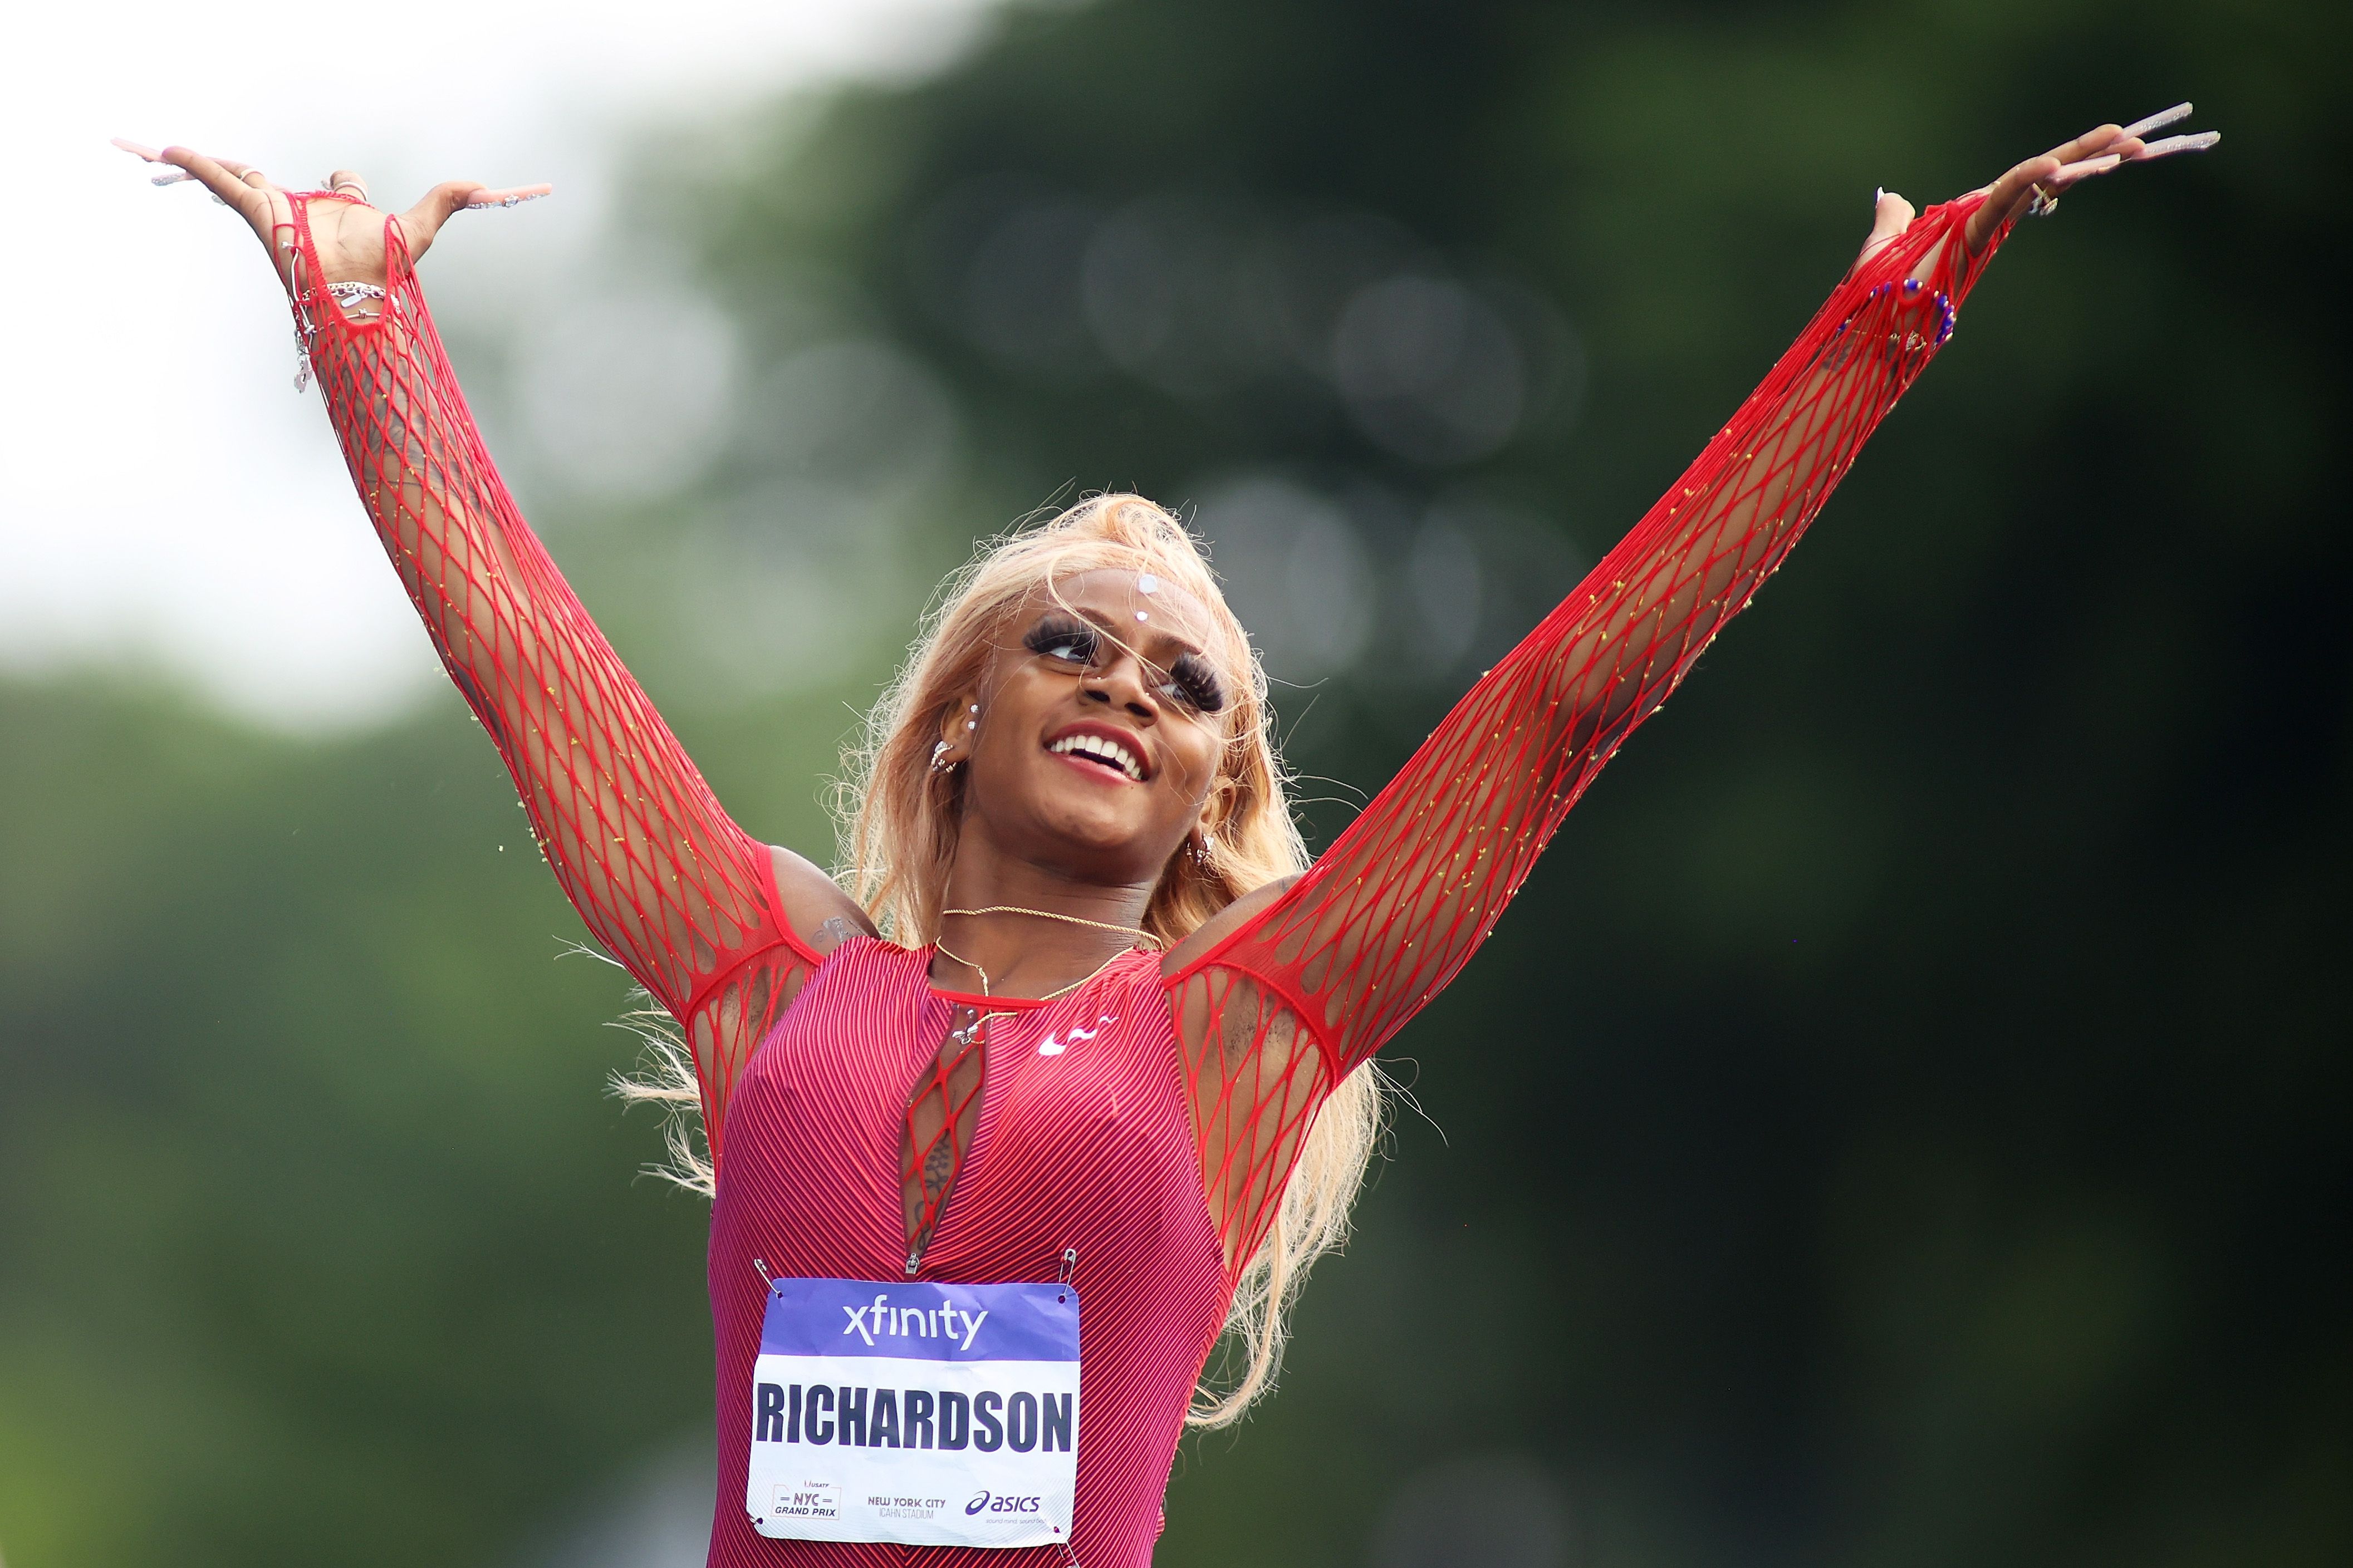 El reivindicativo look de la atleta Sha'Carri Richardson crea controversia